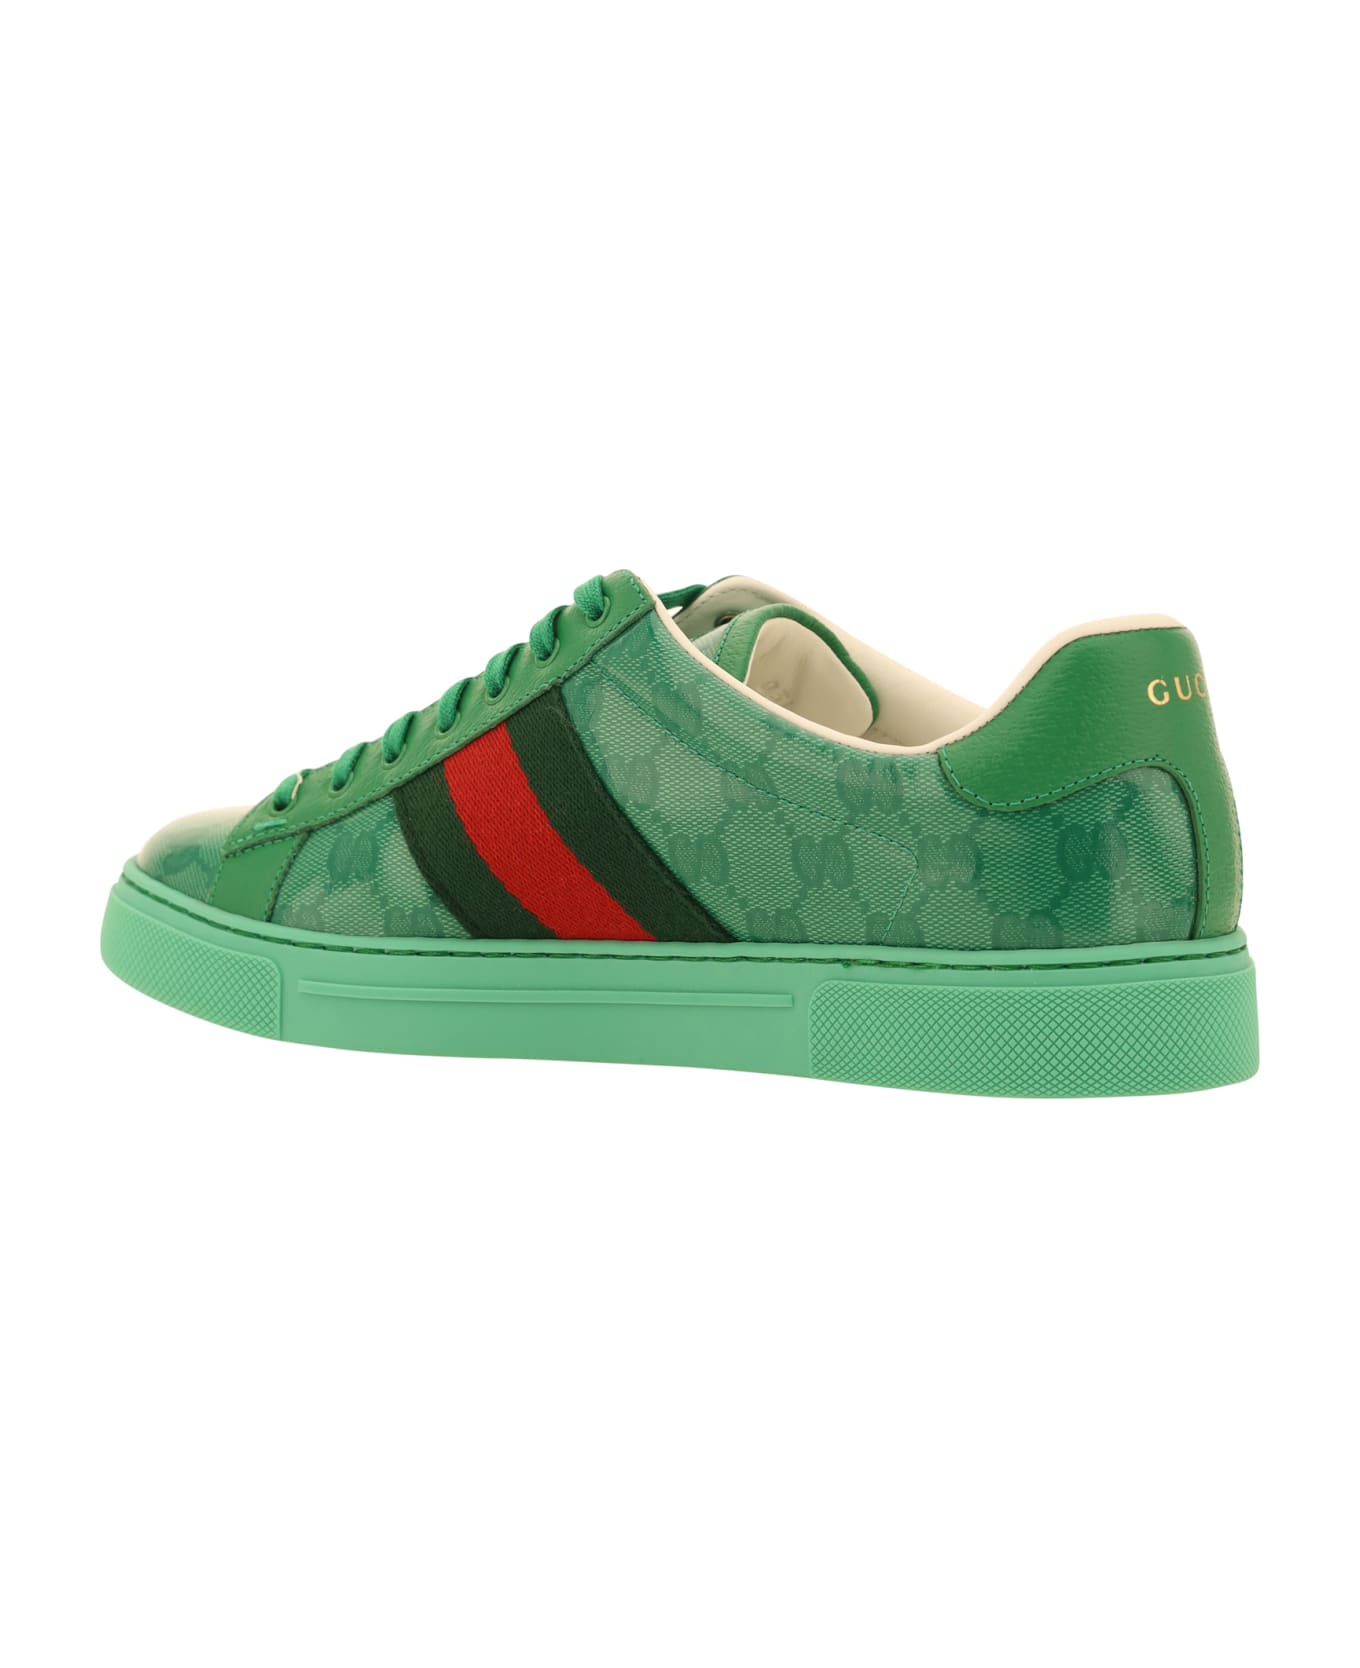 Gucci Ace Sneakers - N.sha/n.sha/vrv